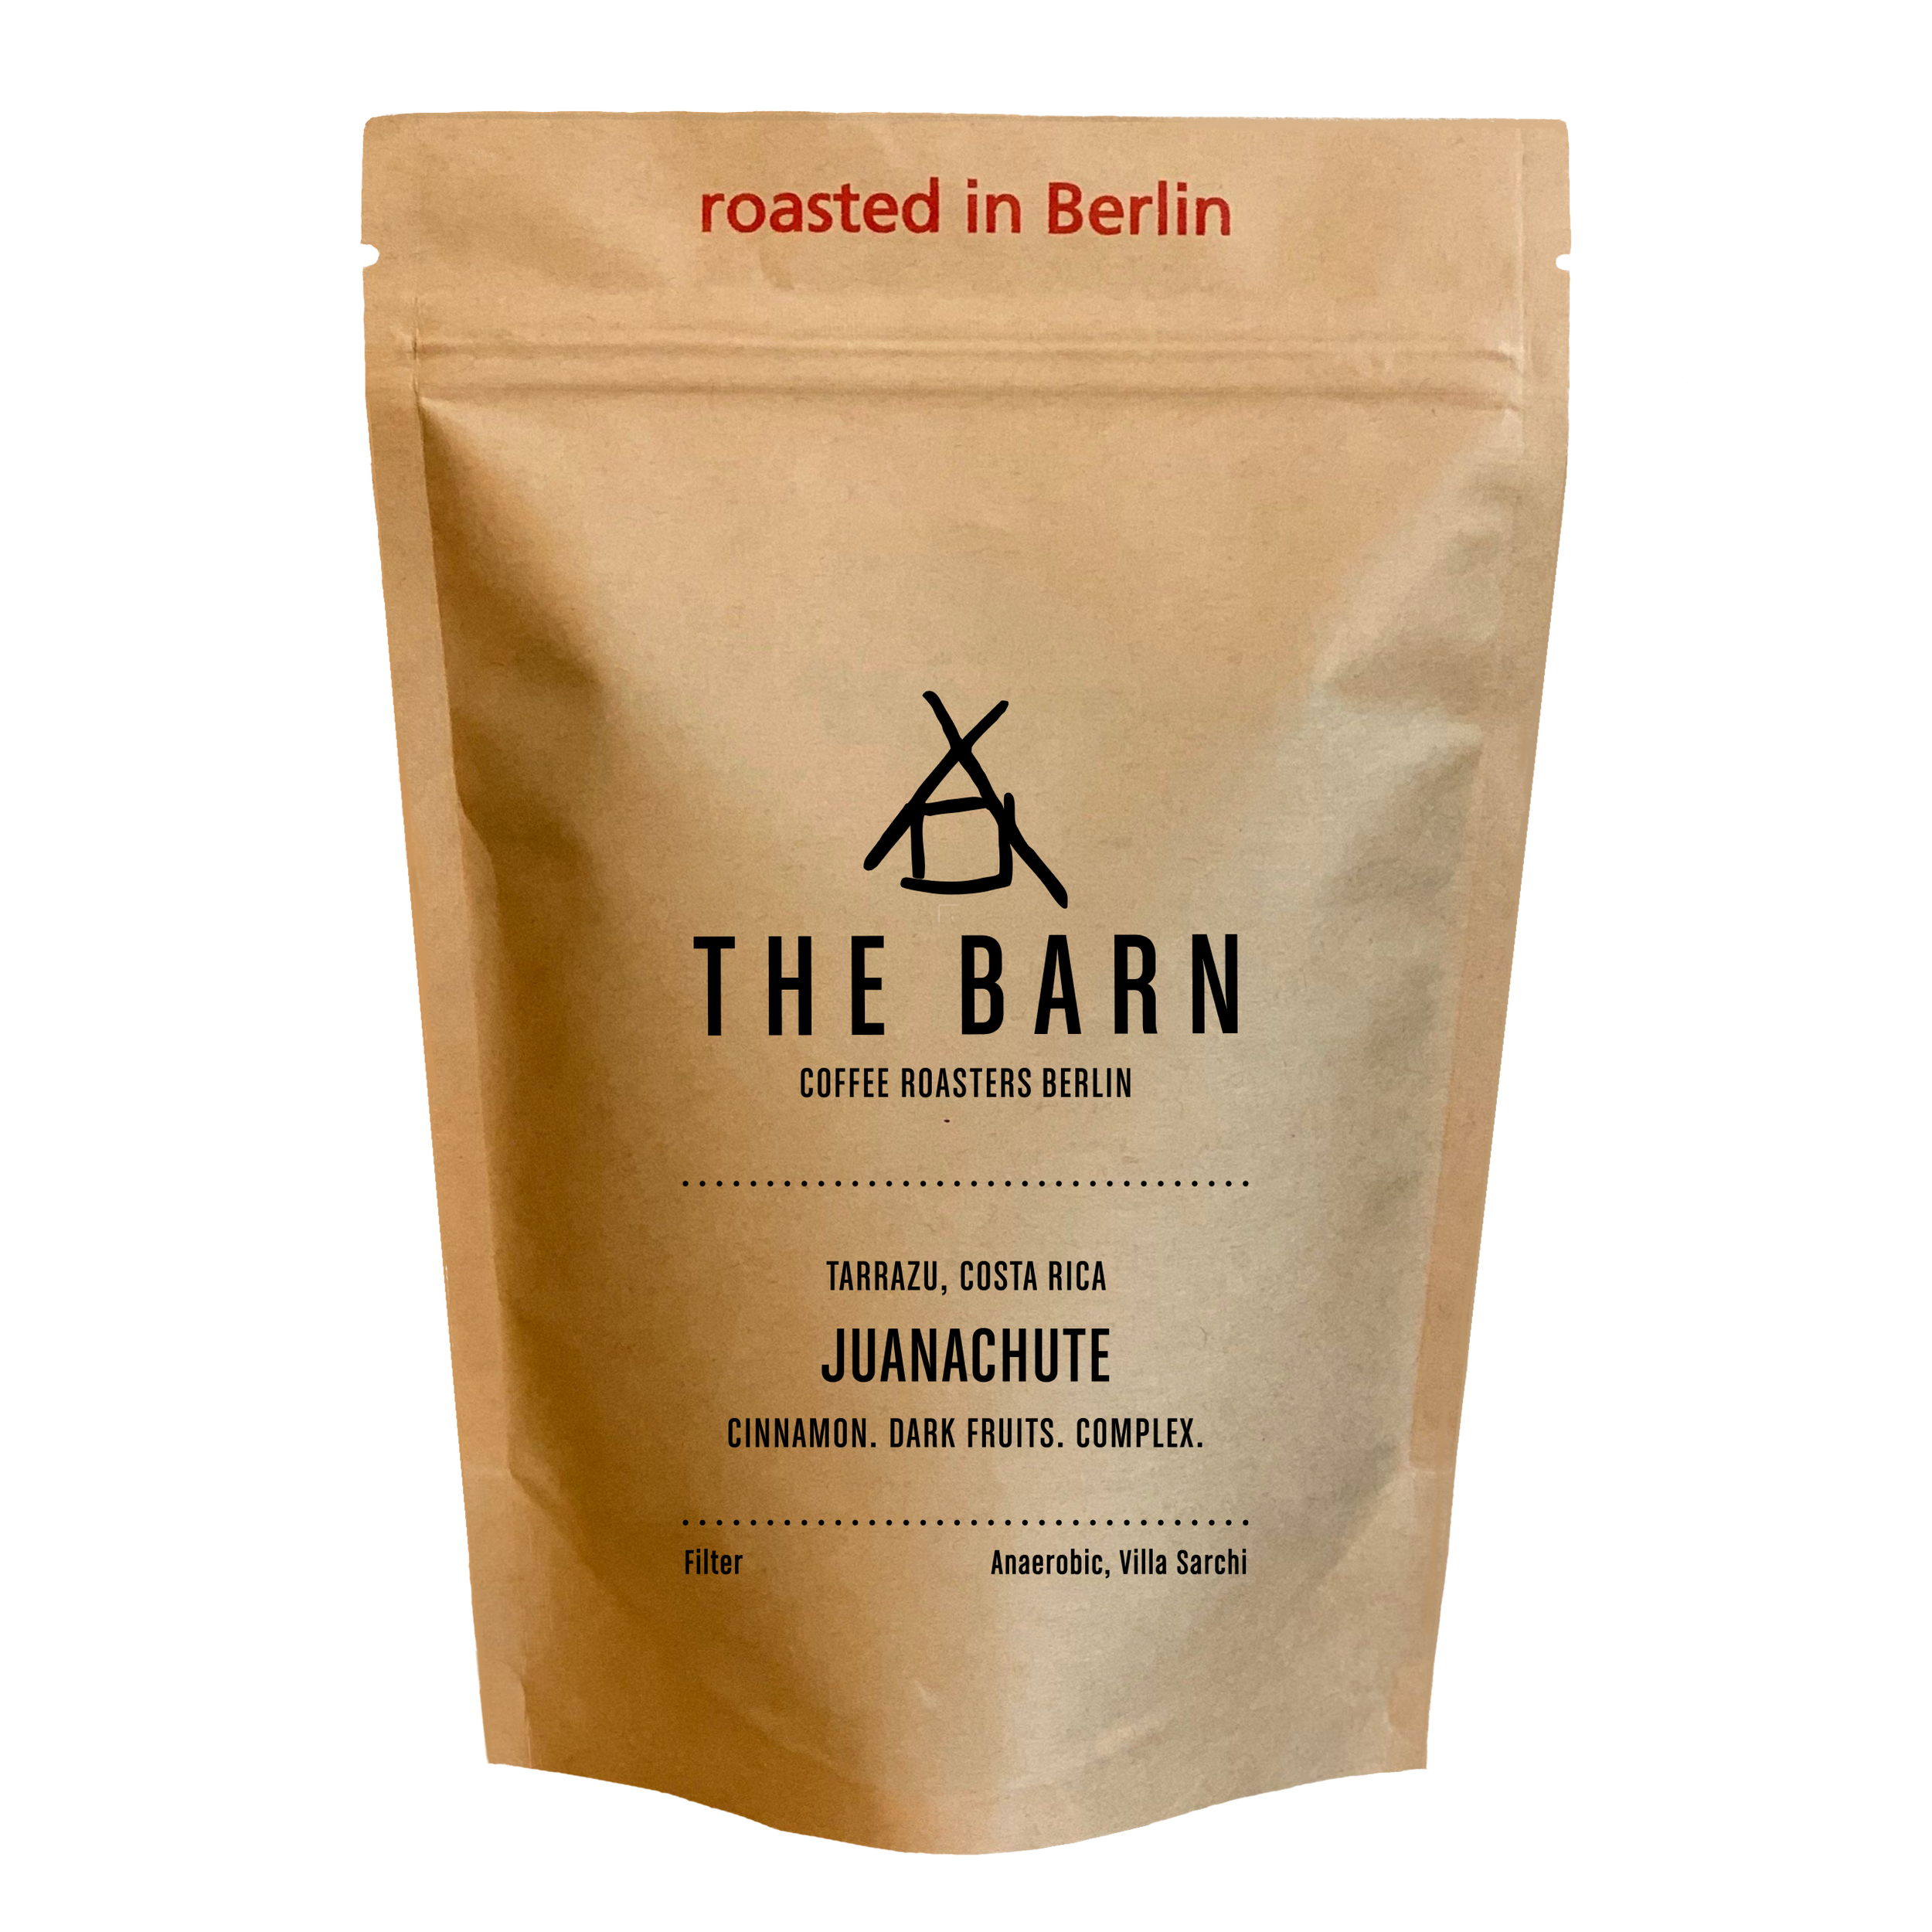 THE BARN Coffee Roasters Berlin